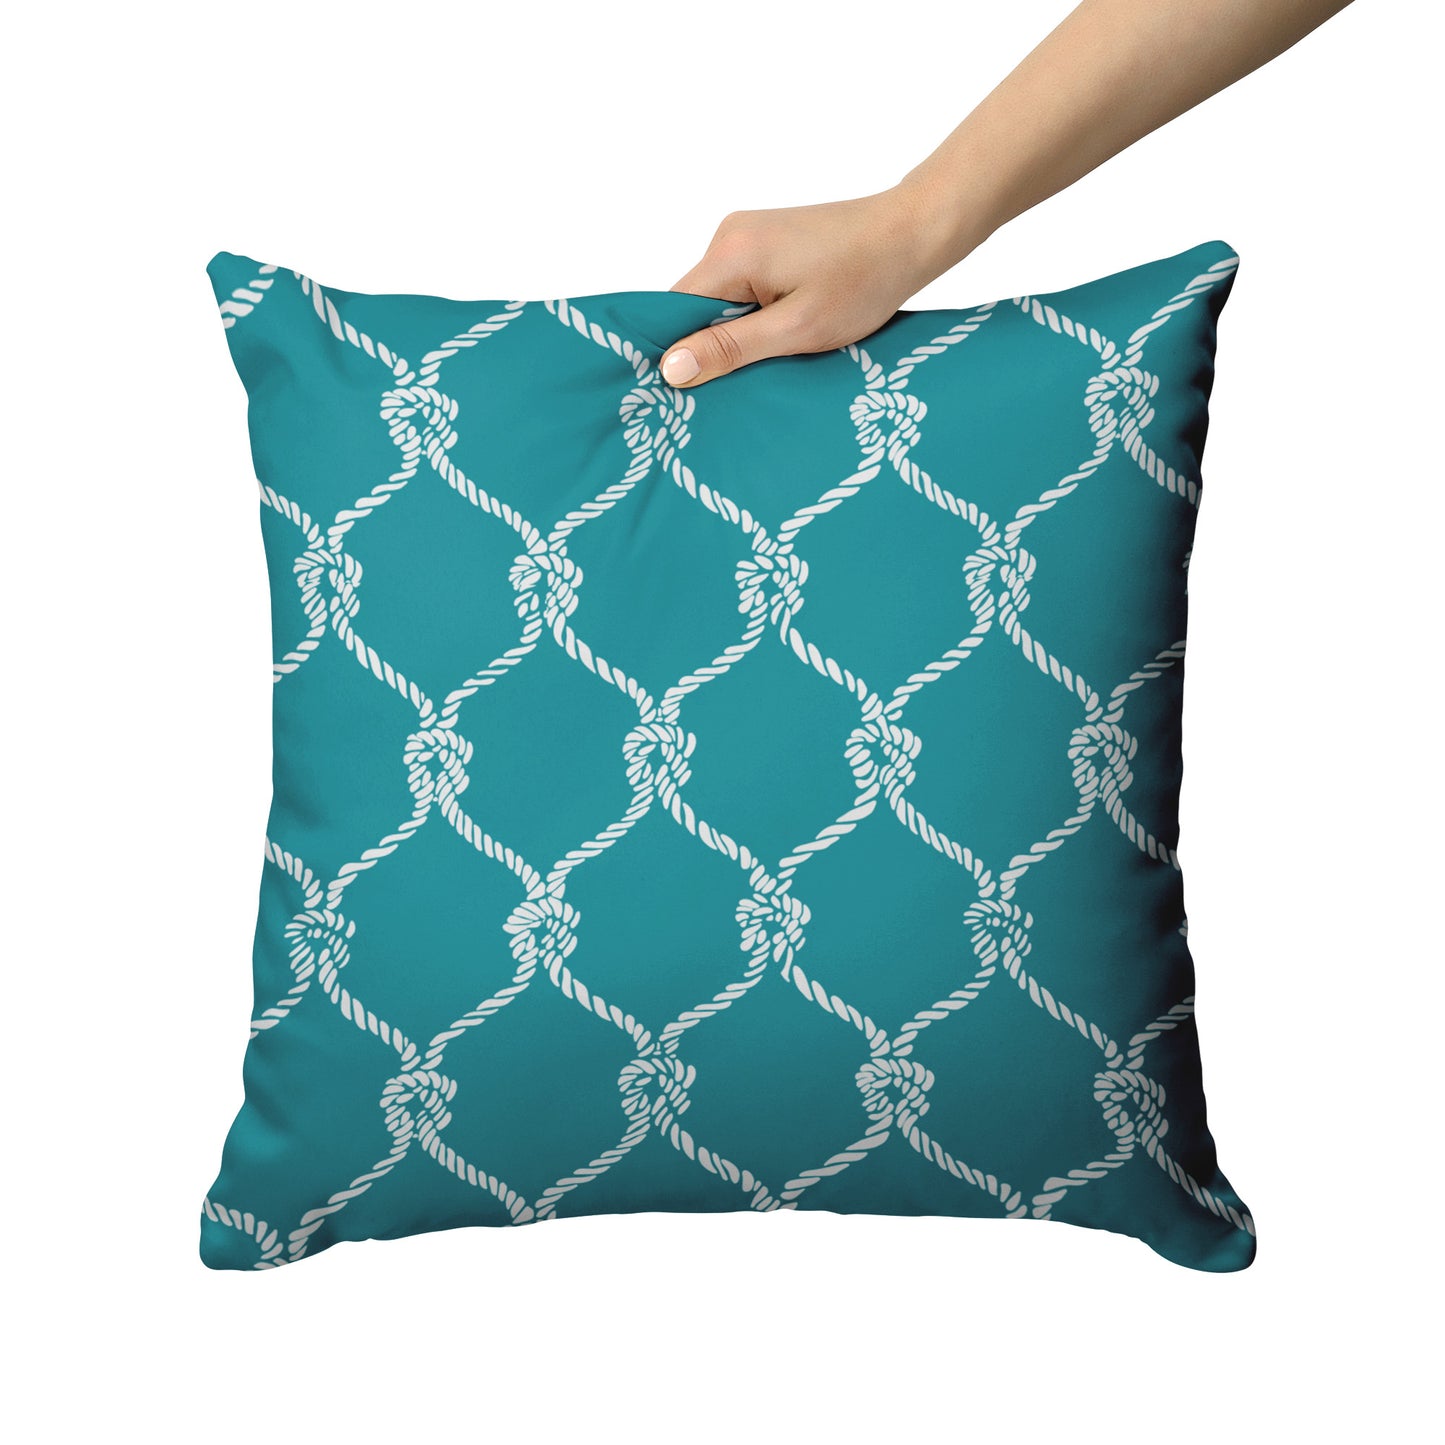 Nautical Netting Design on Teal Background, Throw Pillow